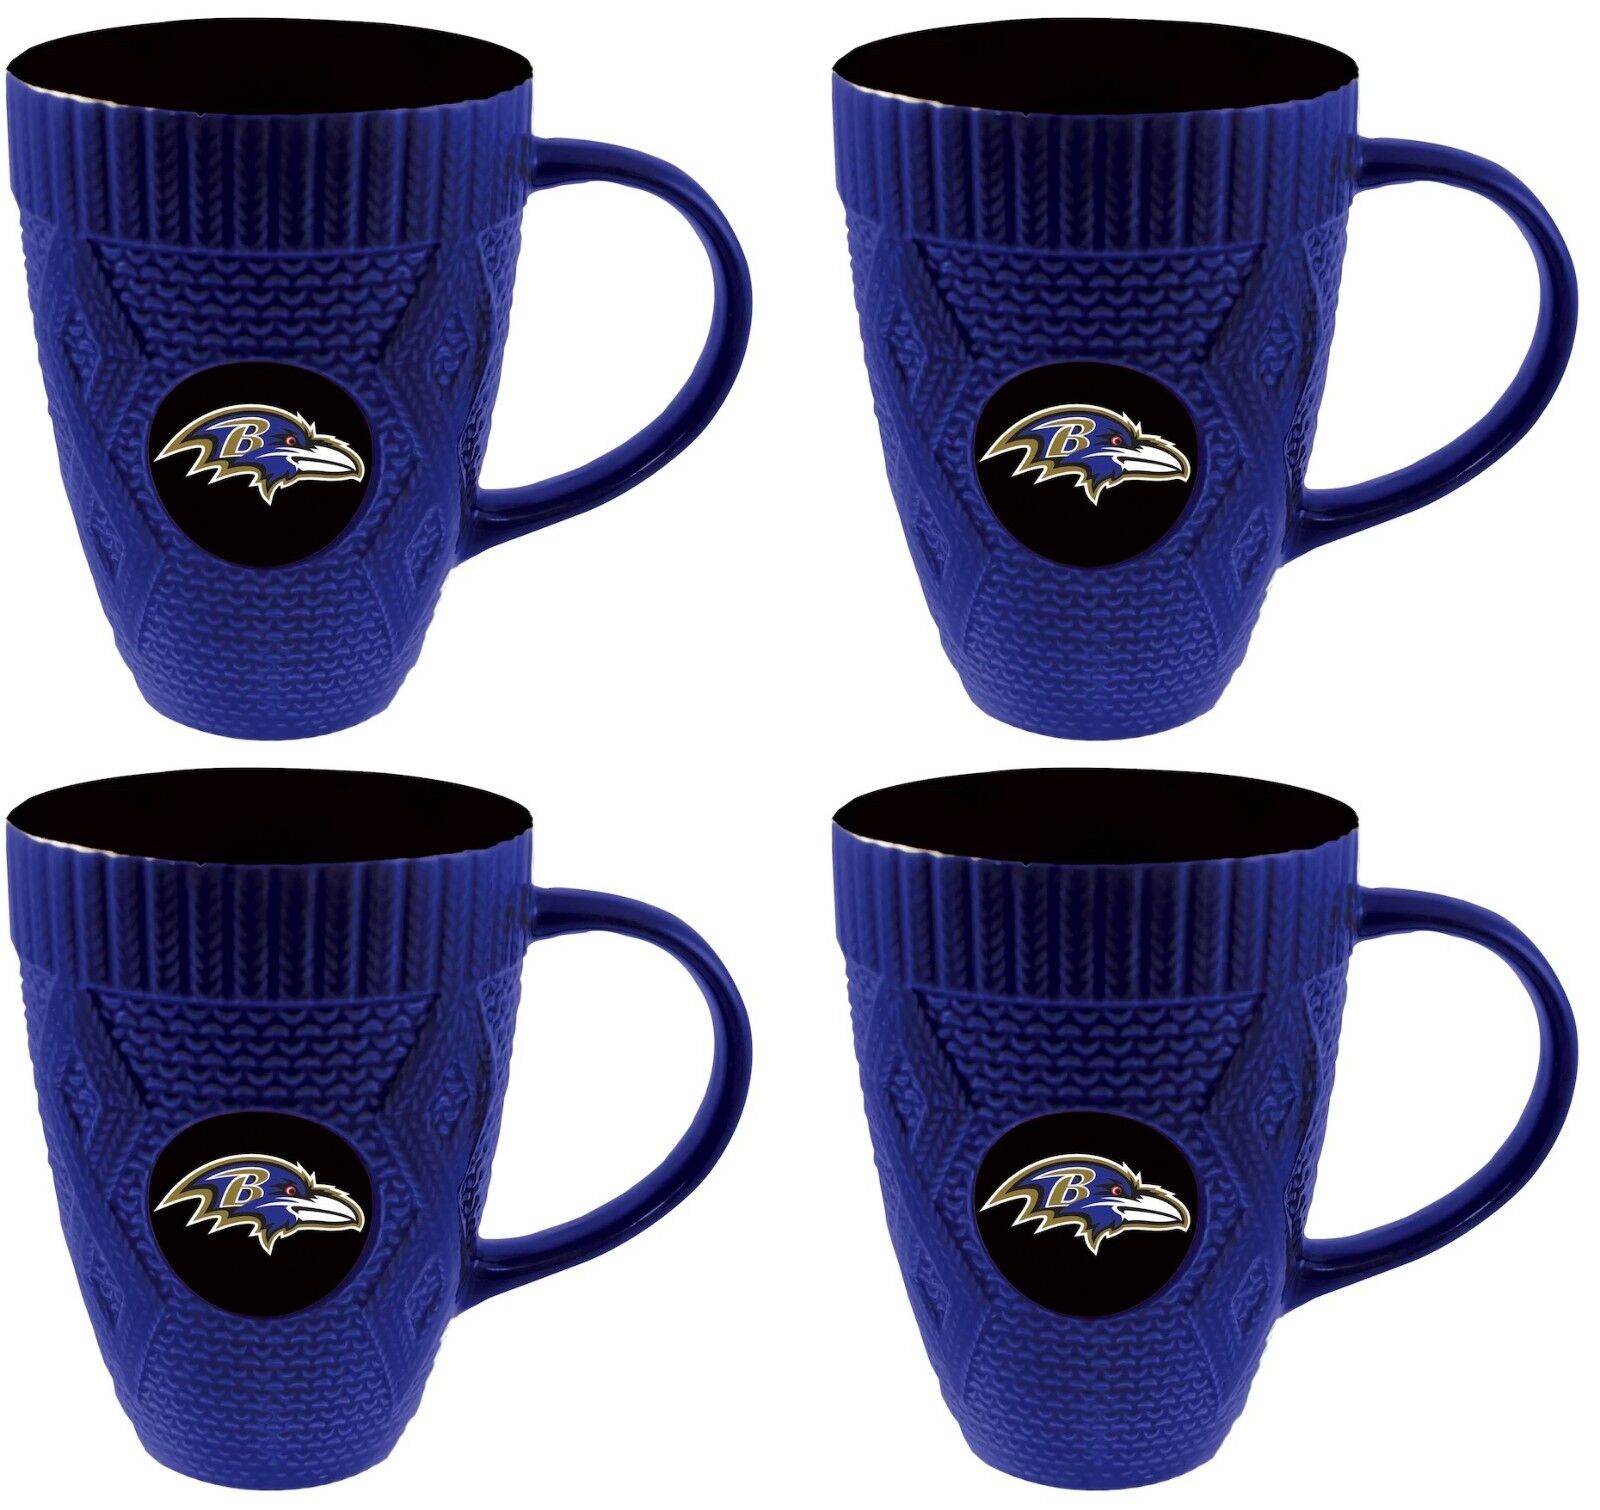 4- NFL Baltimore Ravens Football Ceramic Coffee Mugs Drink Cups 16oz 16 Ounces